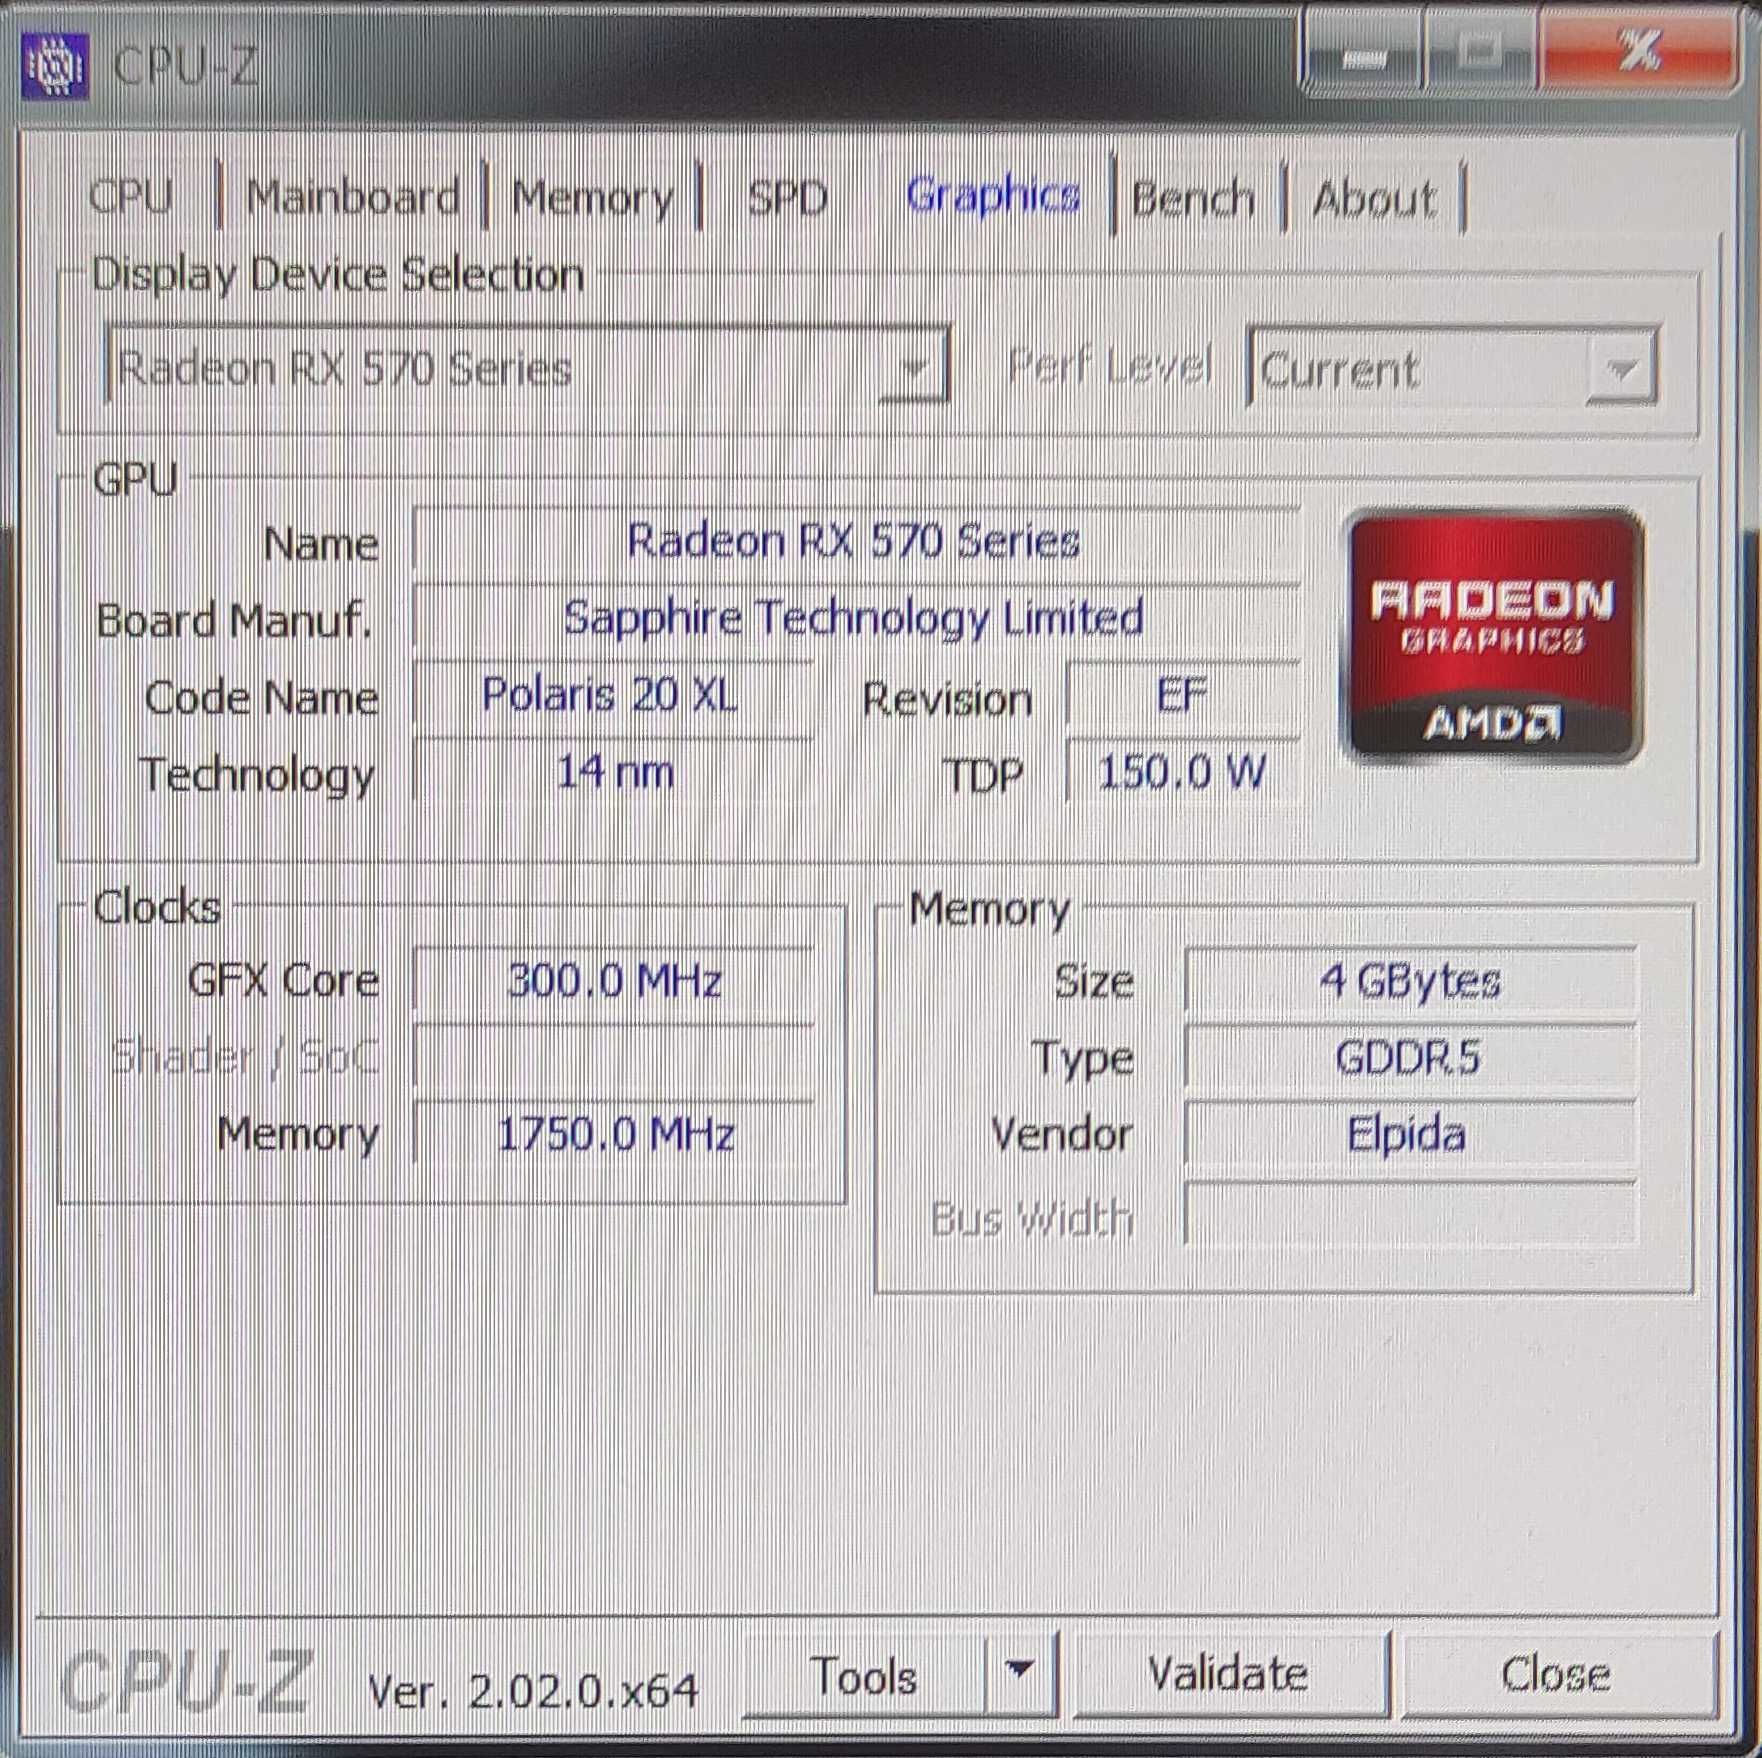 Najtaniej! Komputer, Radeon rx570 4gb, i5 2,66GHz, 16GB 1TB dysk